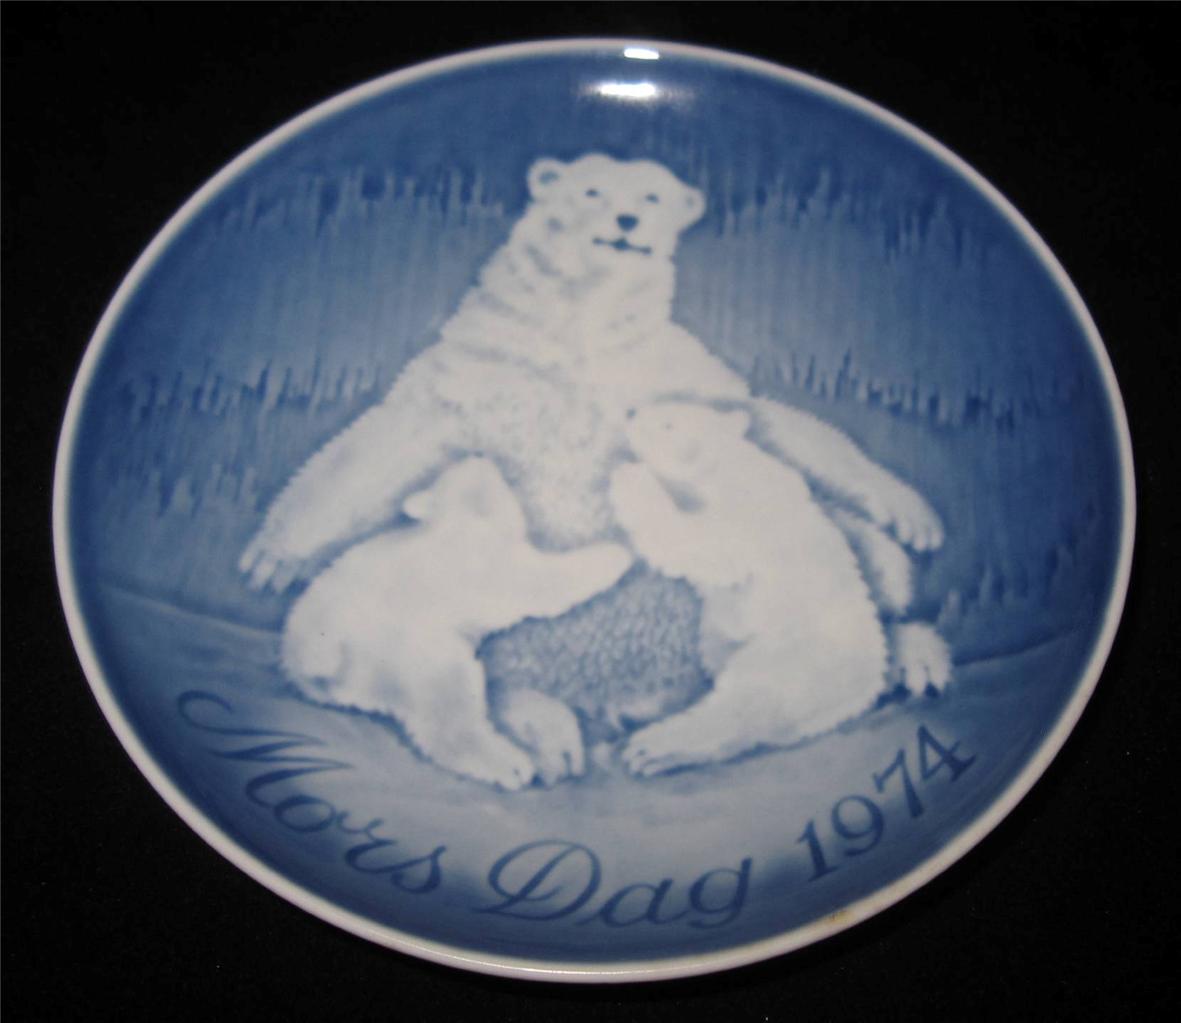 Bing Grondahl B G 9374 Mother's Day Plate 1974 | eBay